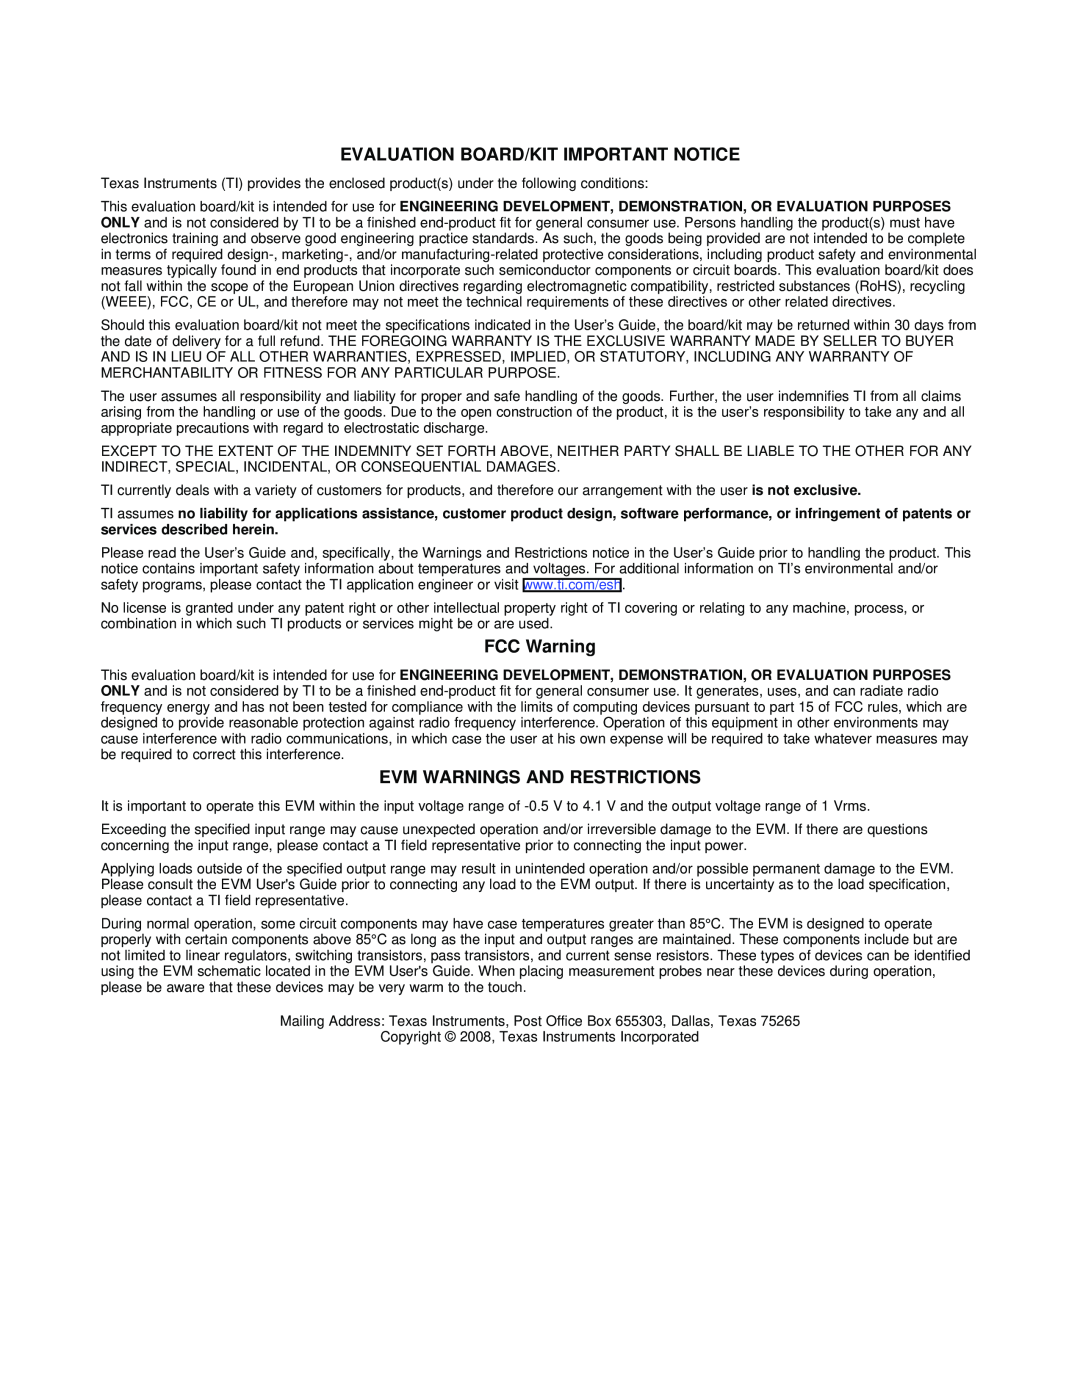 Texas Instruments TAS5601 manual Evaluation Board/Kit Important Notice, FCC Warning, Evm Warnings And Restrictions 